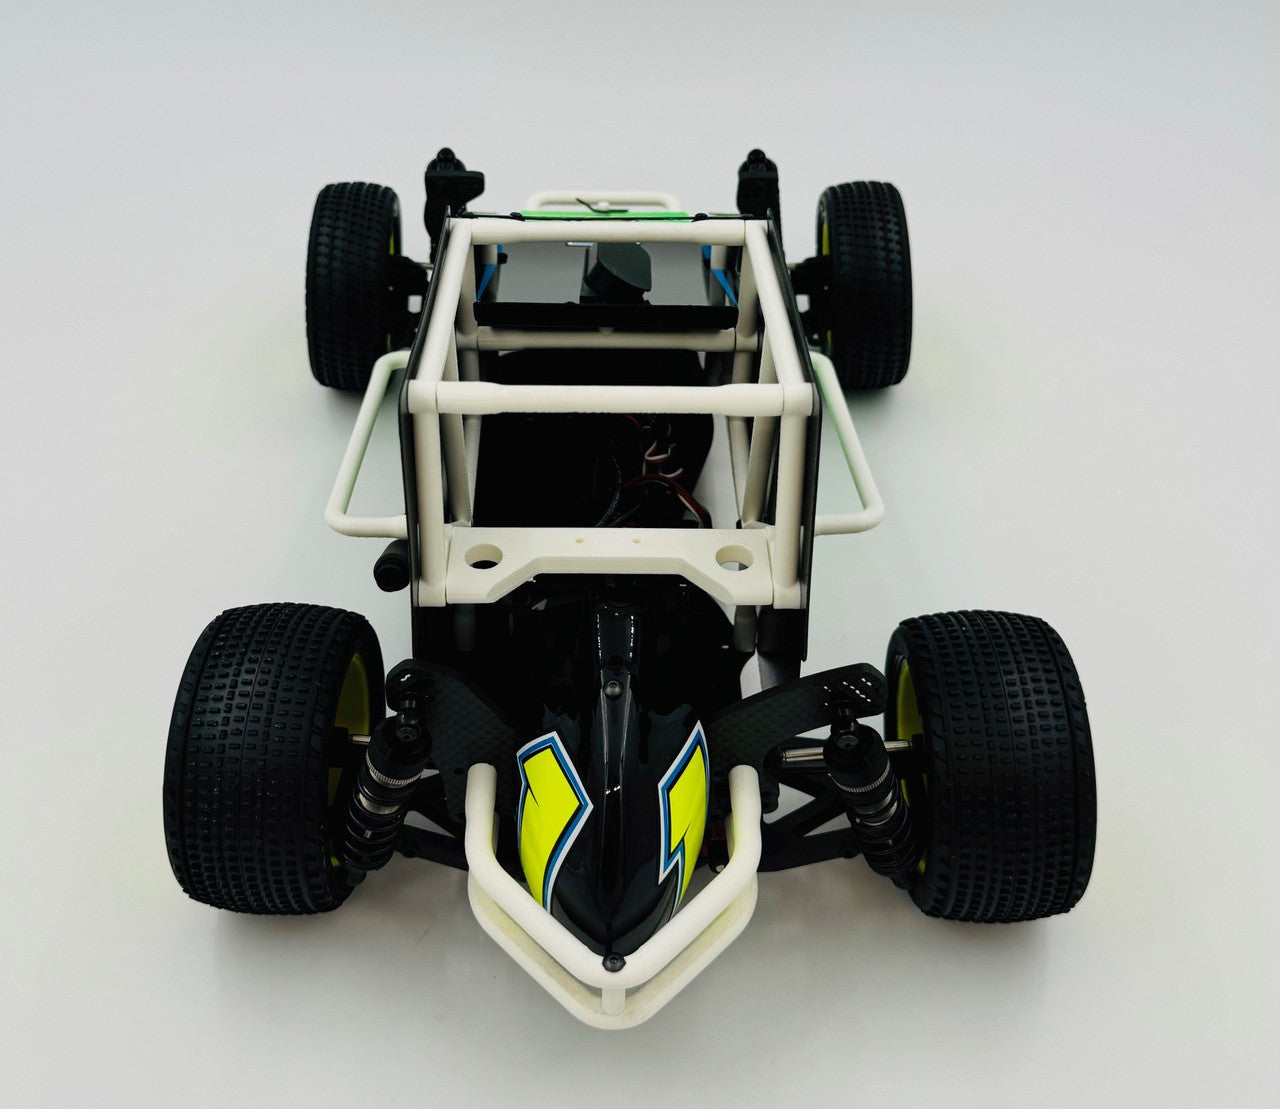 McAllister Racing Flip Cage for Midget Car, 421